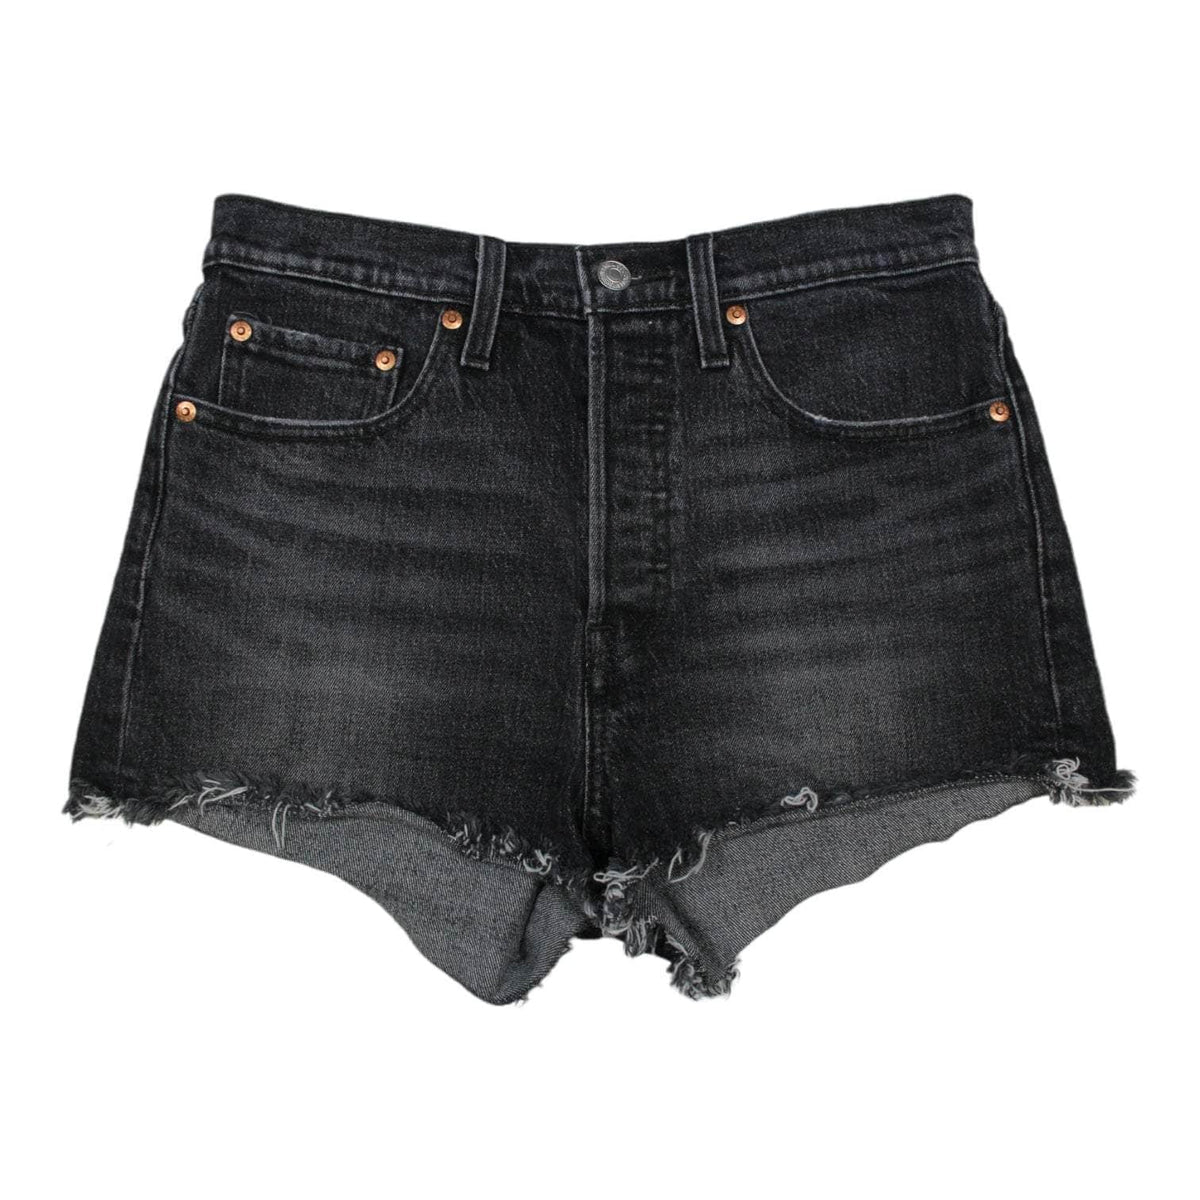 Levis 501 Black Distressed Denim Shorts